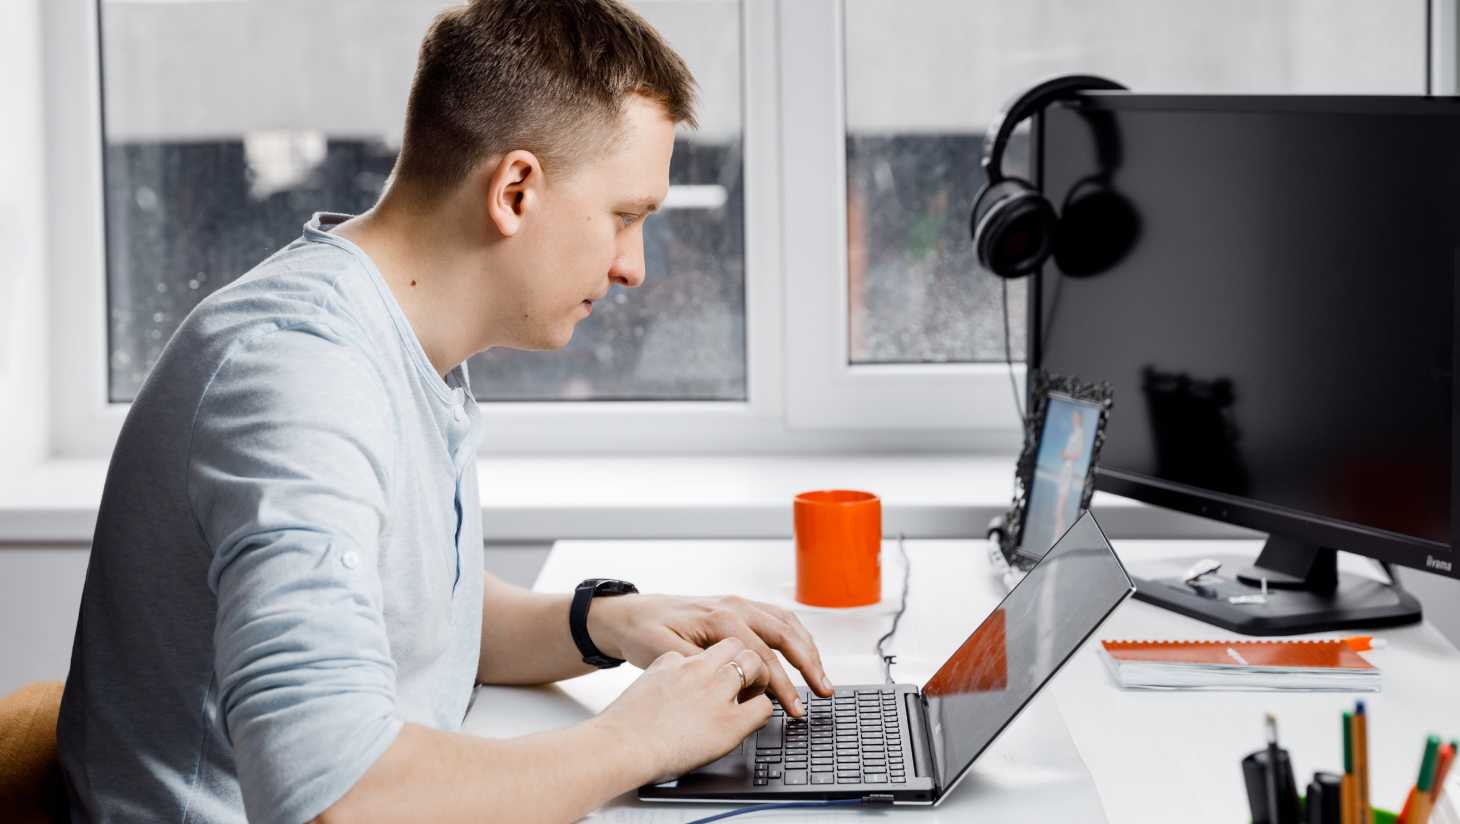 Man in grey shirt behind a computer